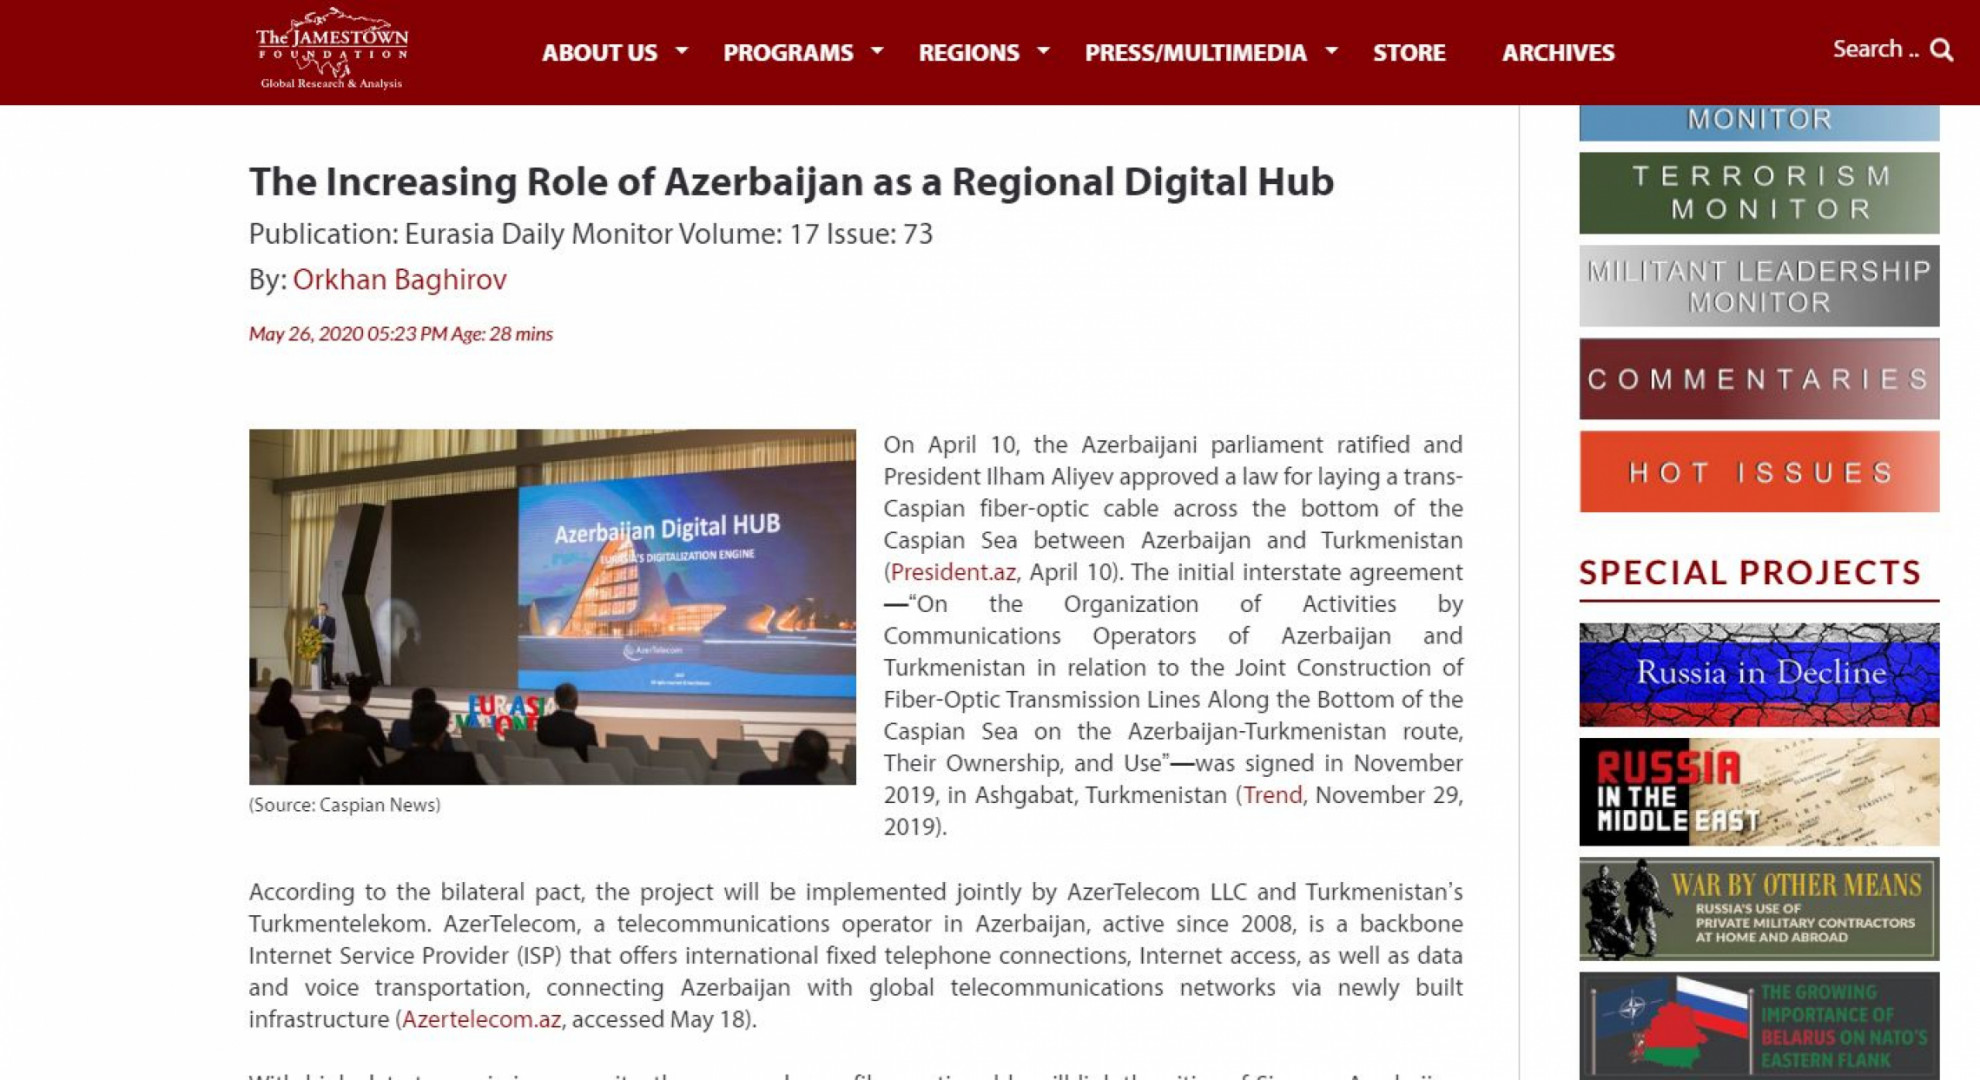 The Increasing Role of Azerbaijan as a Regional Digital Hub